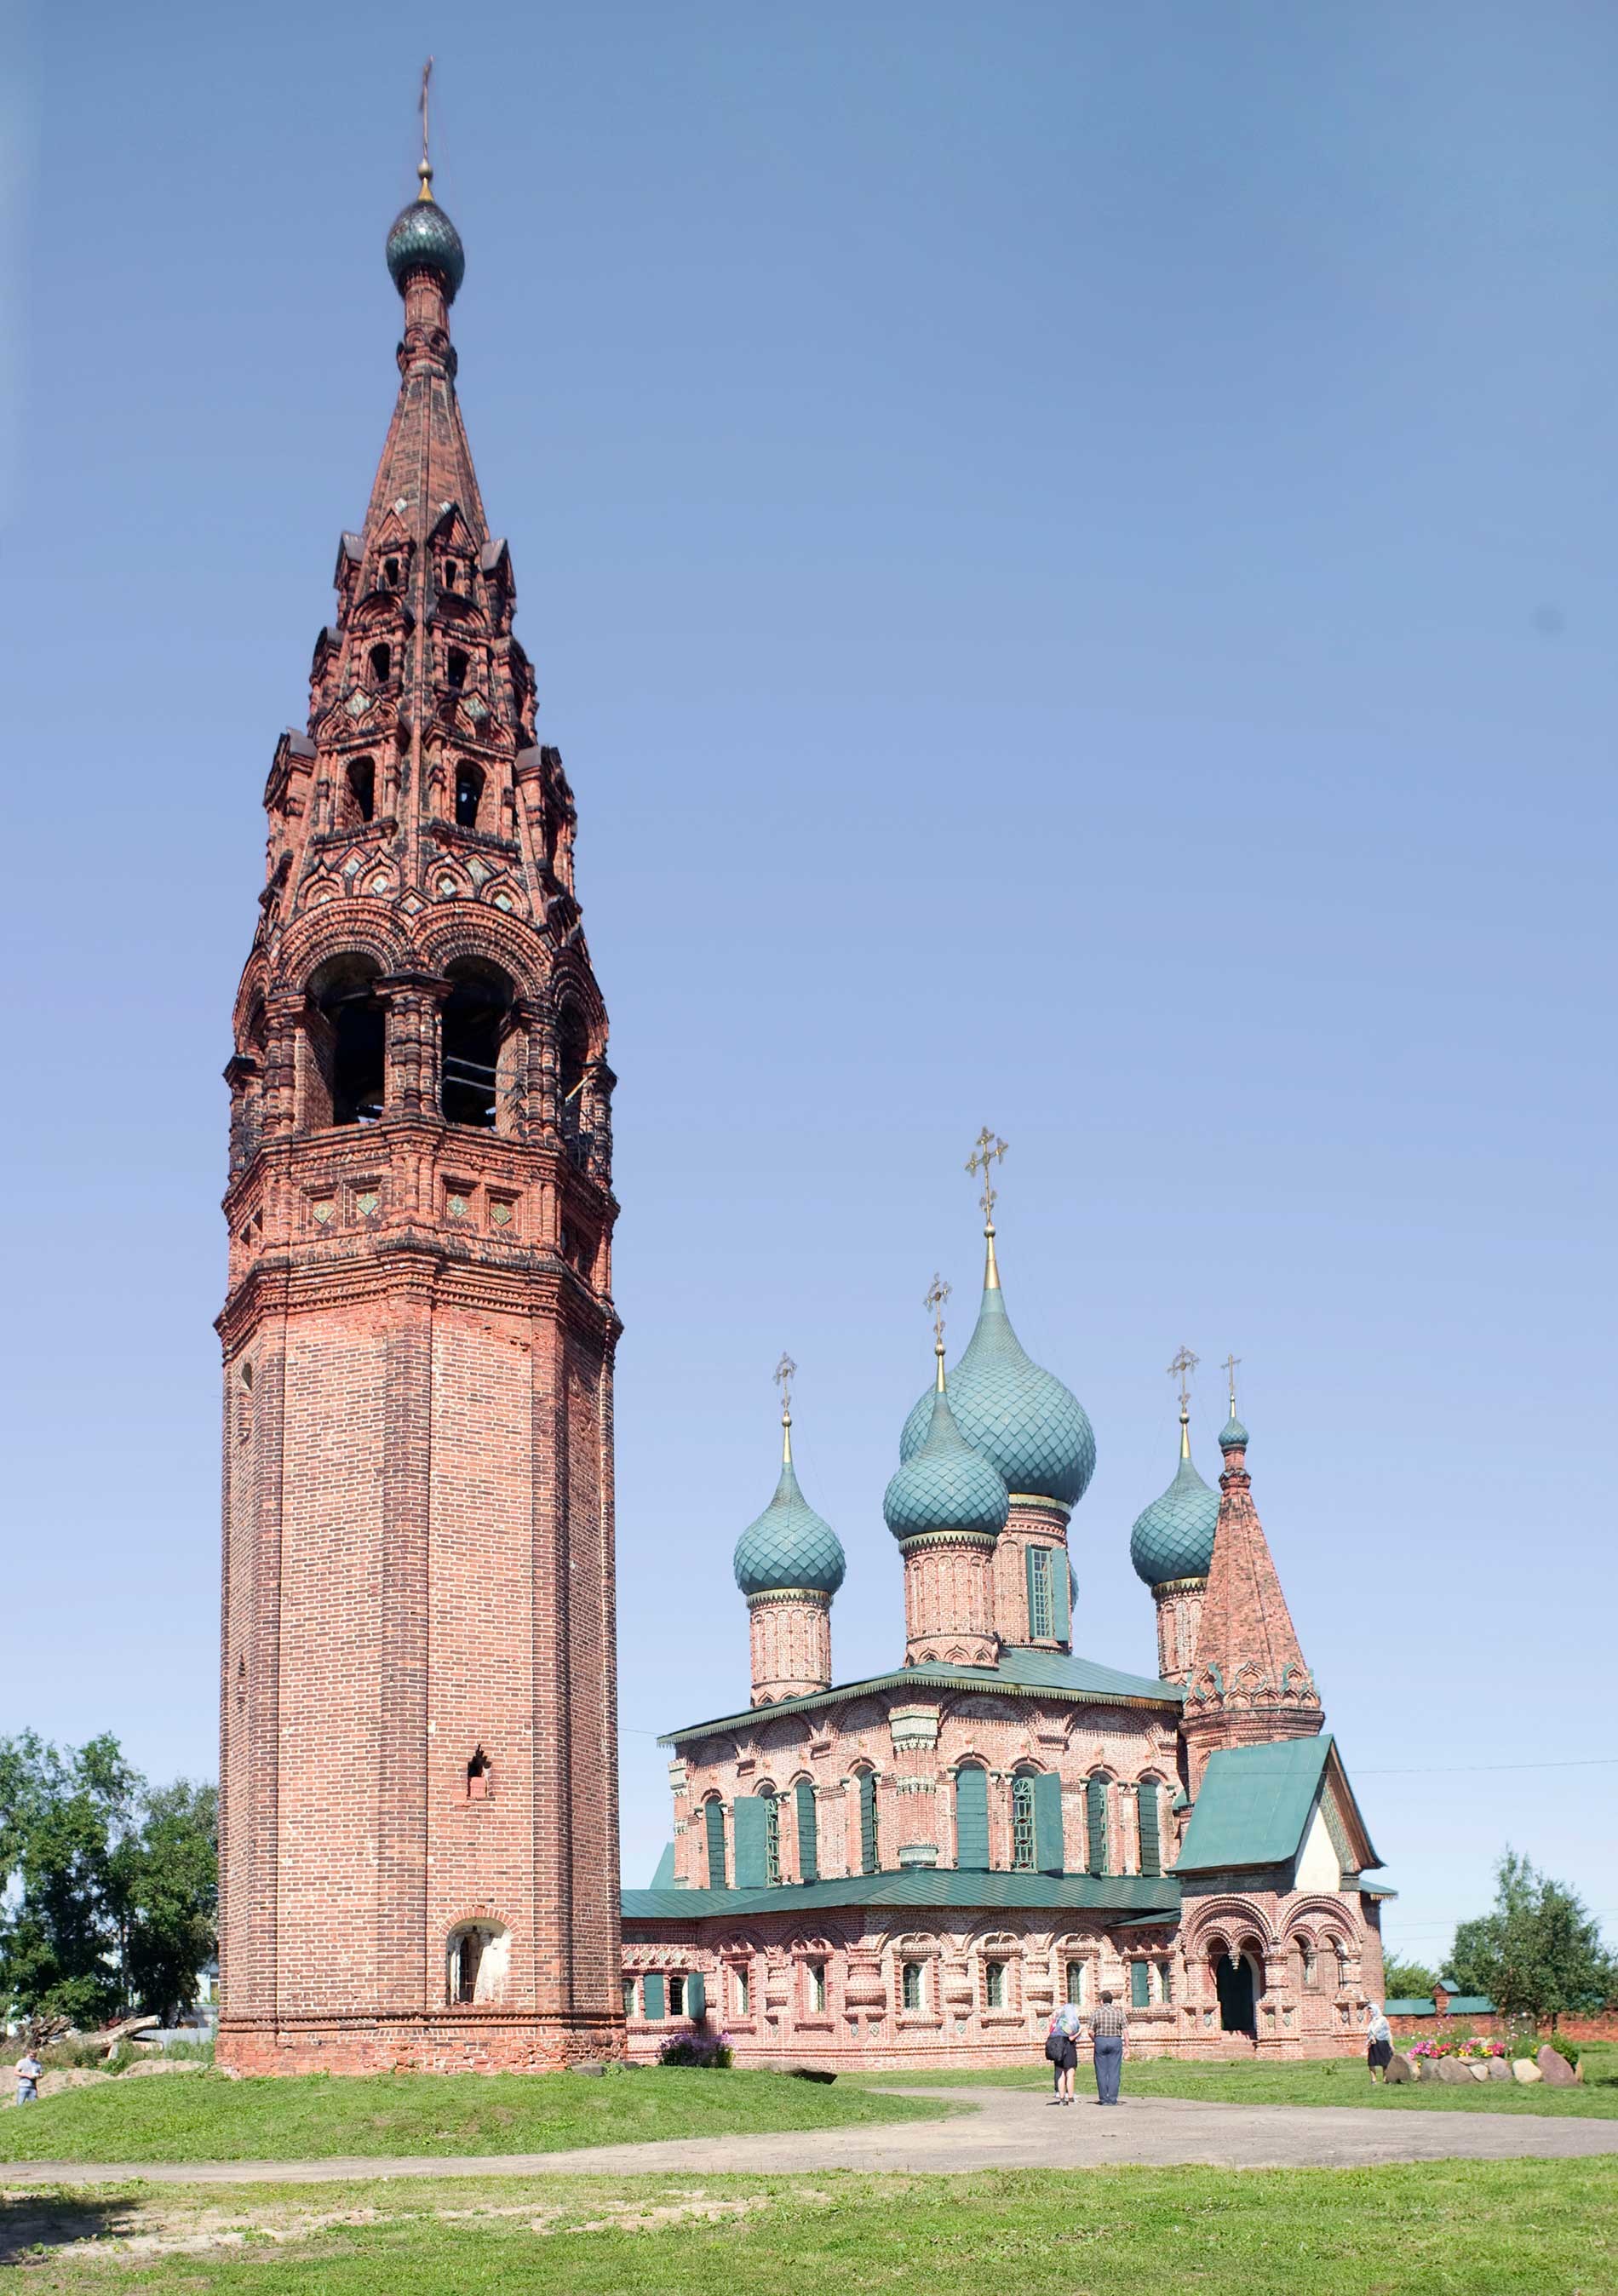 Korovniki ensemble. Bell tower with Church of St. John Chrysostome. Southwest view. August 15, 2017.